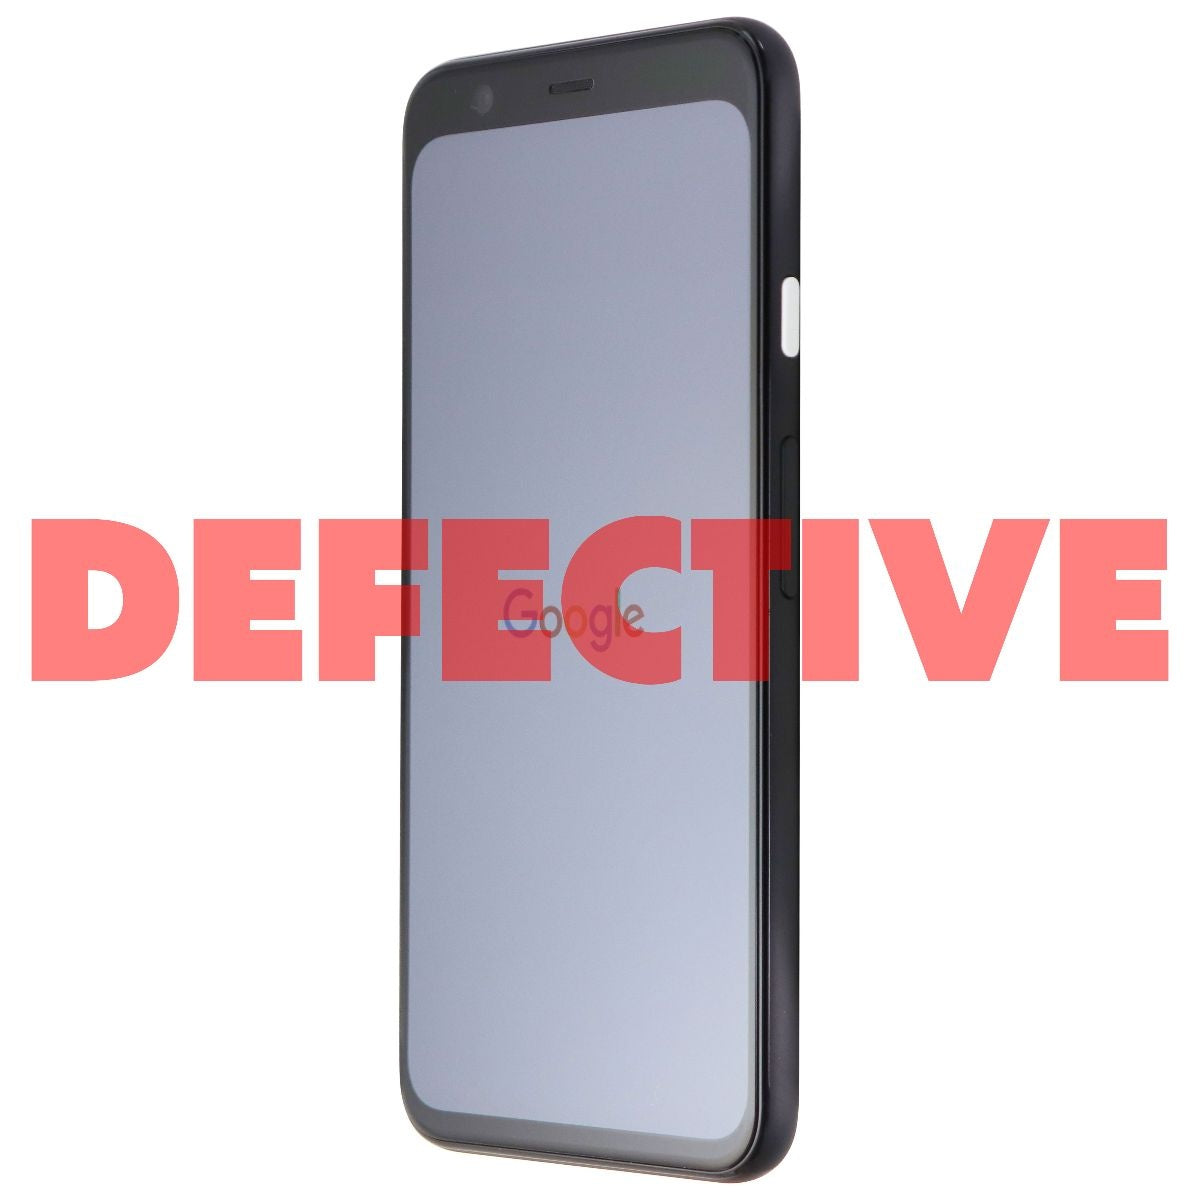 Google Pixel 4 (5.7-inch) Smartphone (G020I) GSM + CDMA - 64GB / Just Black Cell Phones & Smartphones Google    - Simple Cell Bulk Wholesale Pricing - USA Seller